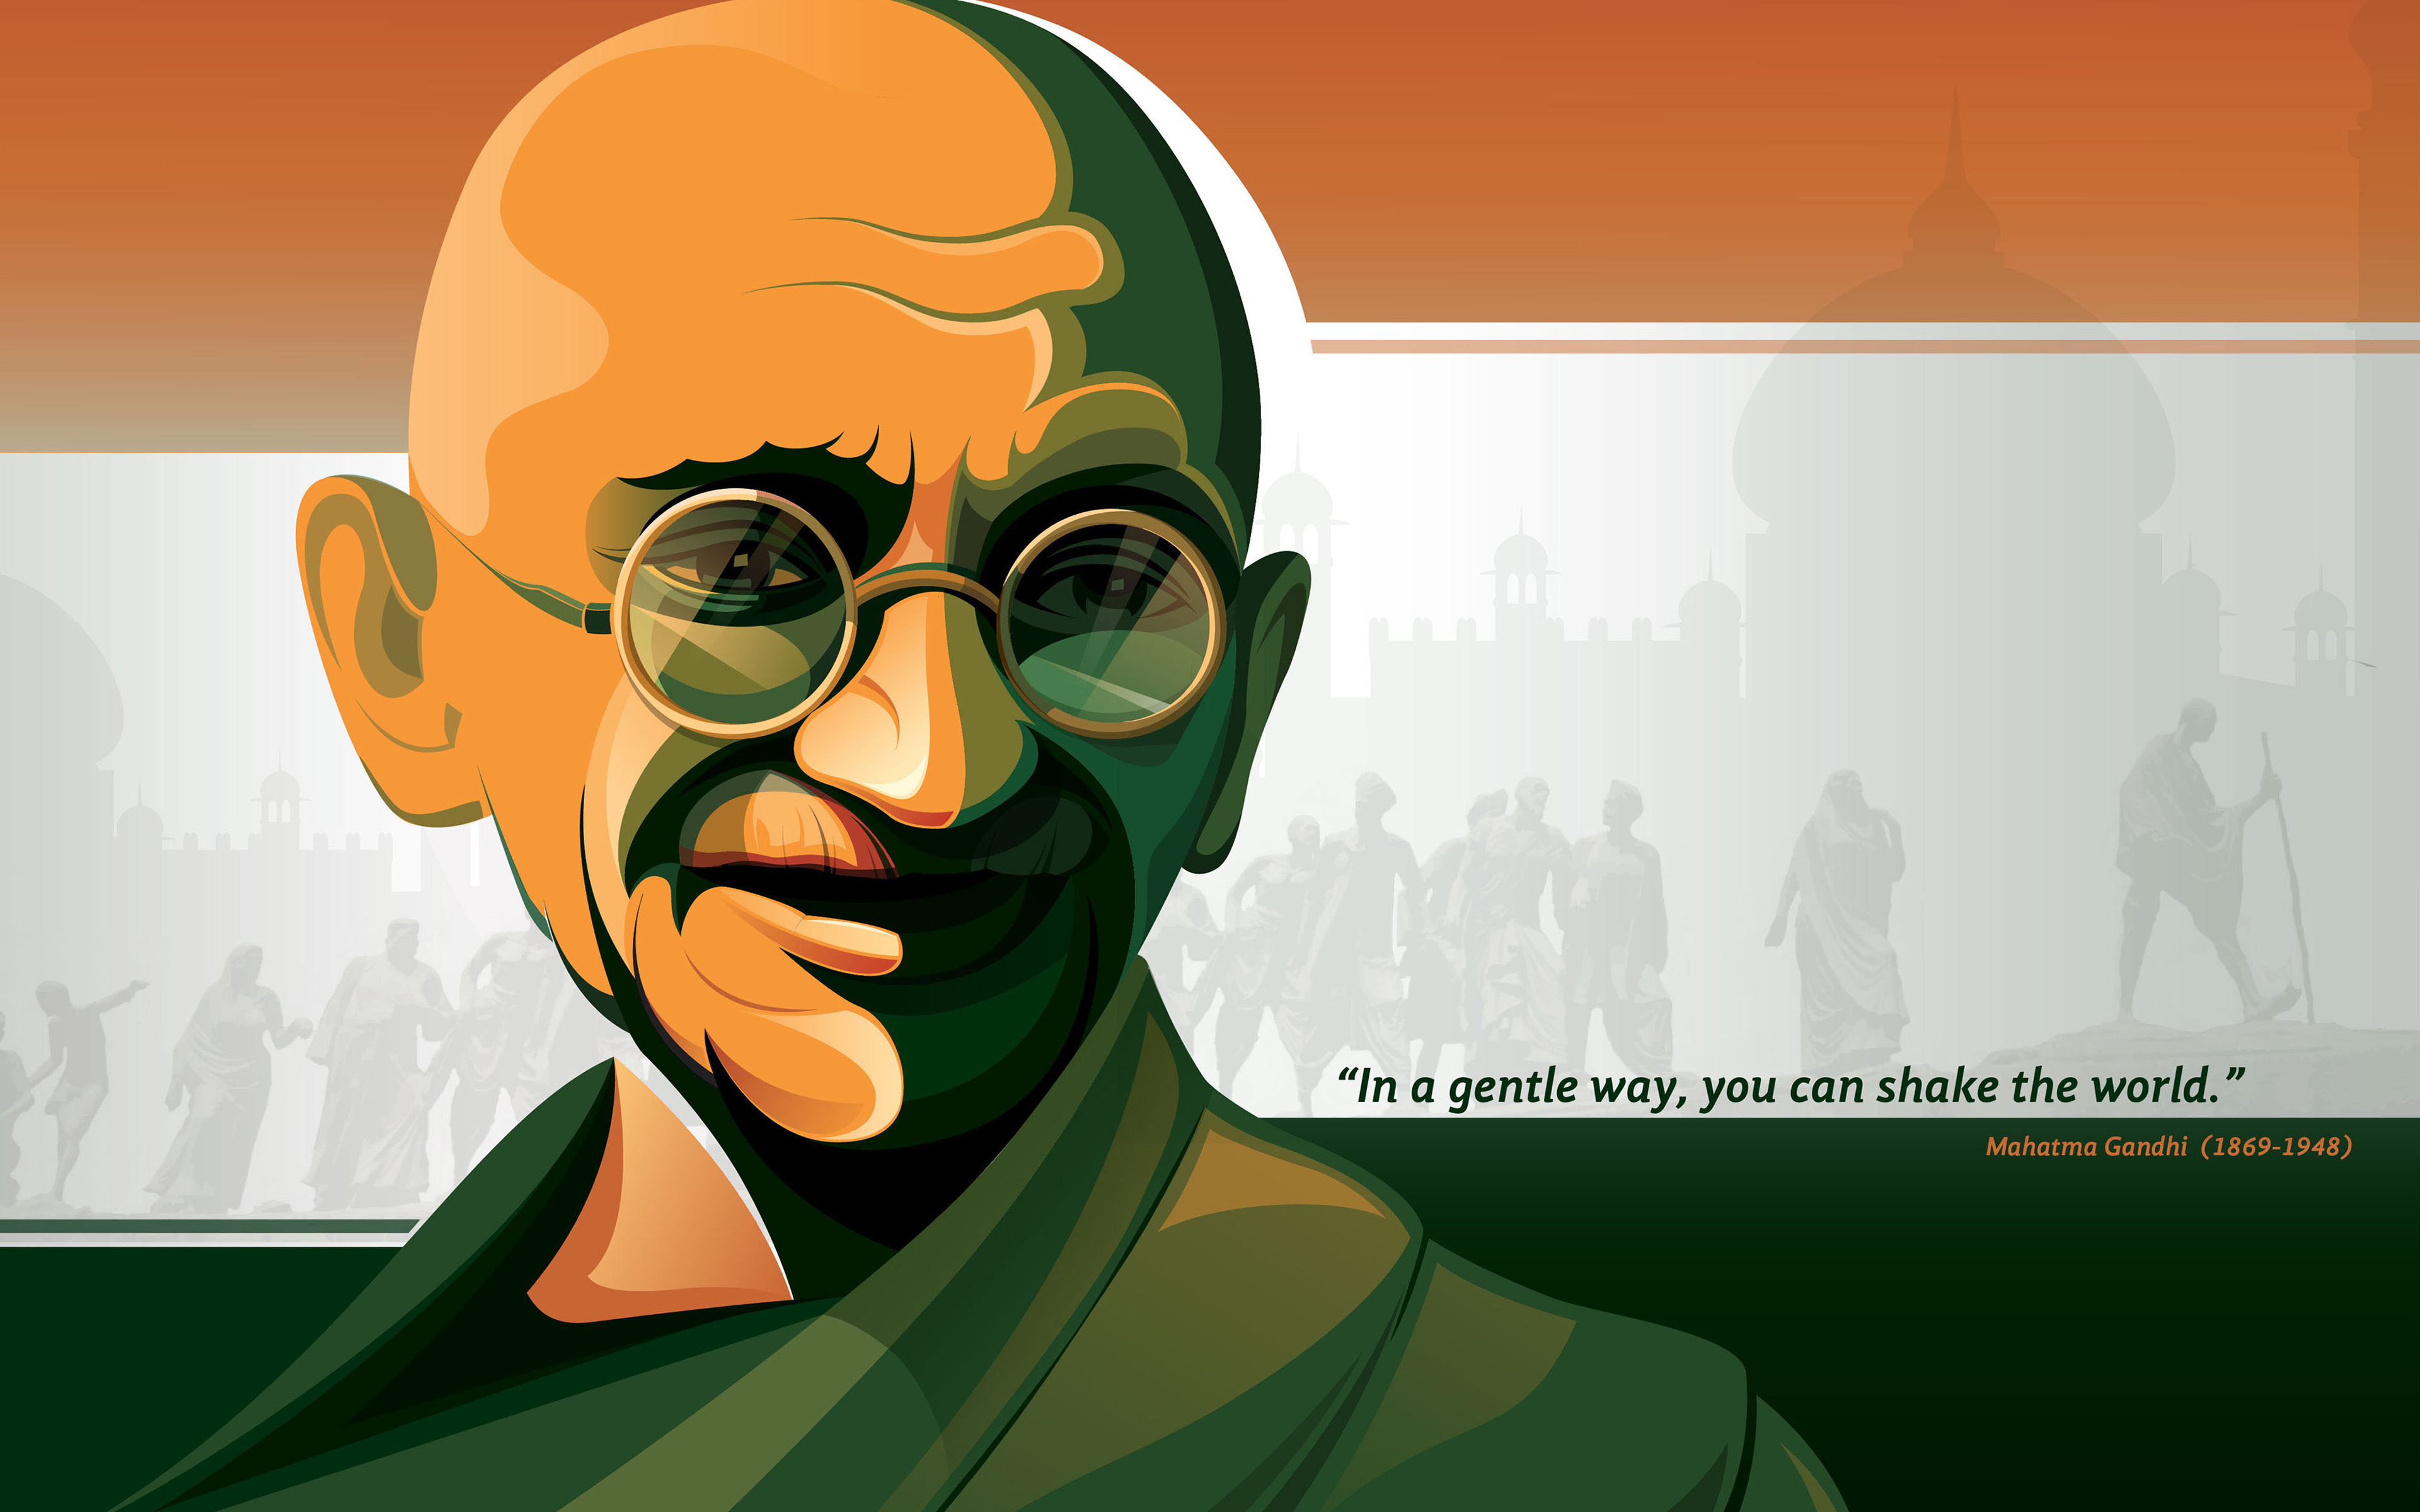 Happy Gandhi Jayanti 2019 , HD Wallpaper & Backgrounds